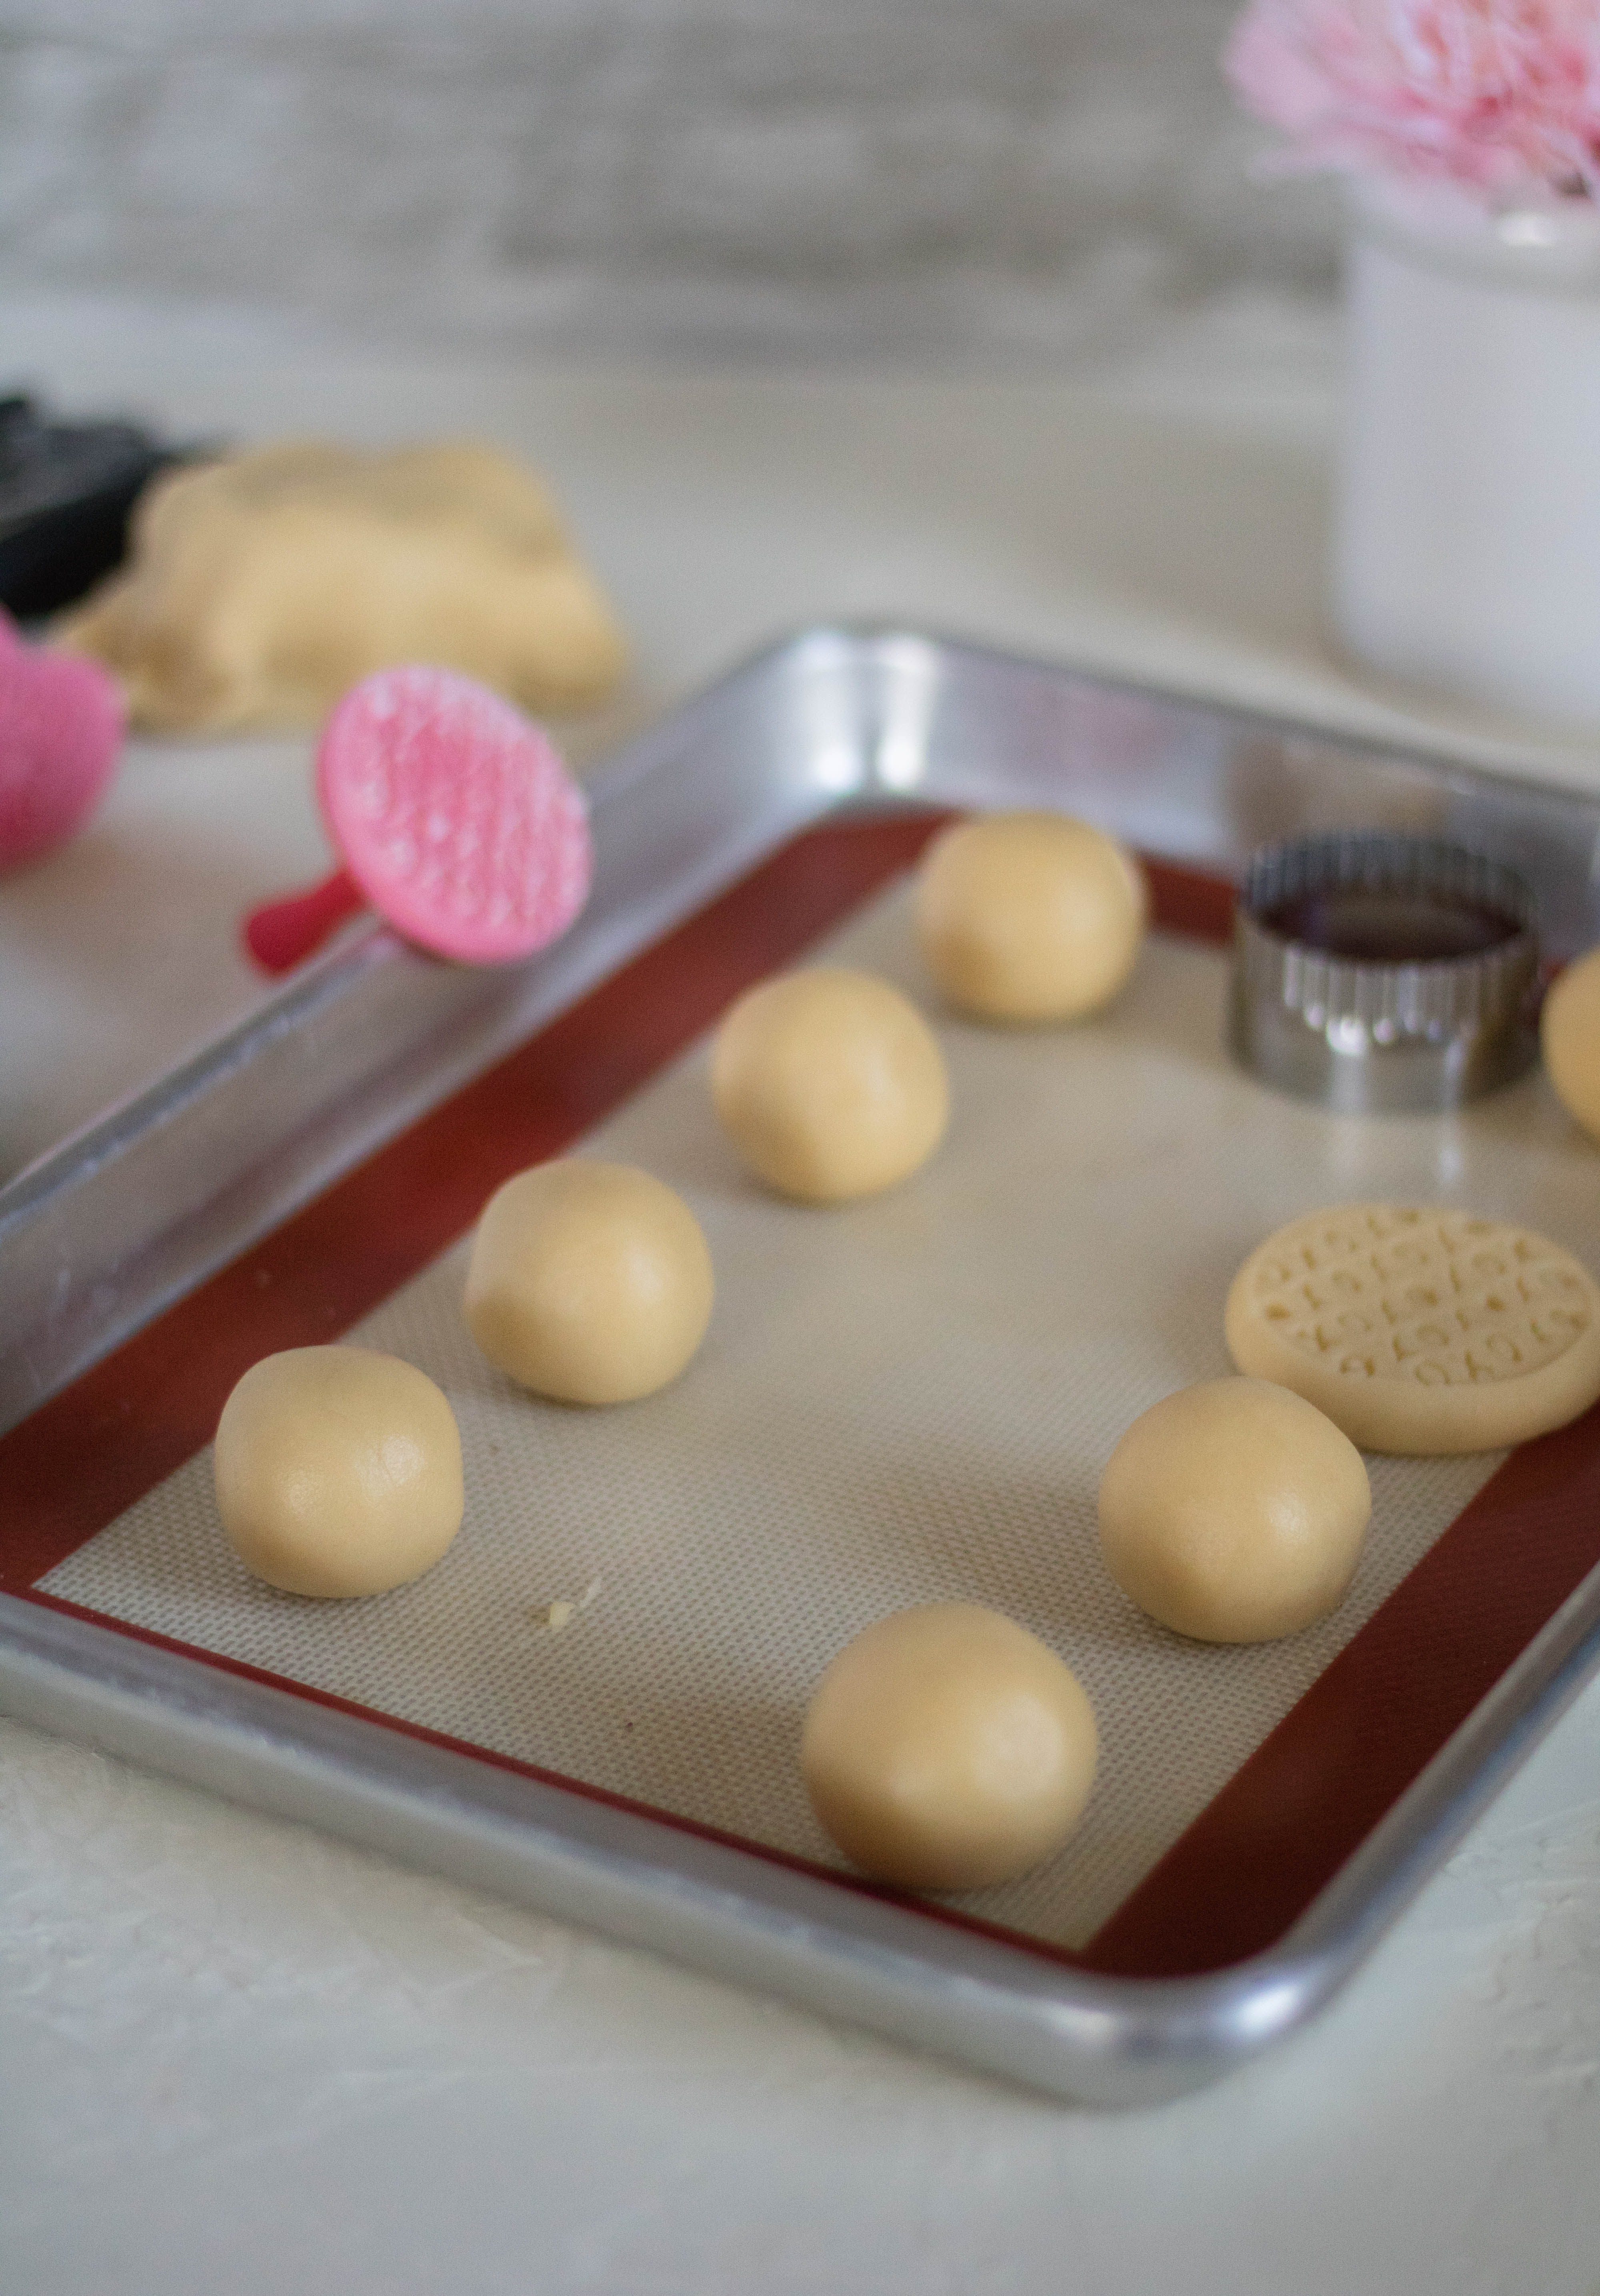 Shortbread dough divided in smaller balls